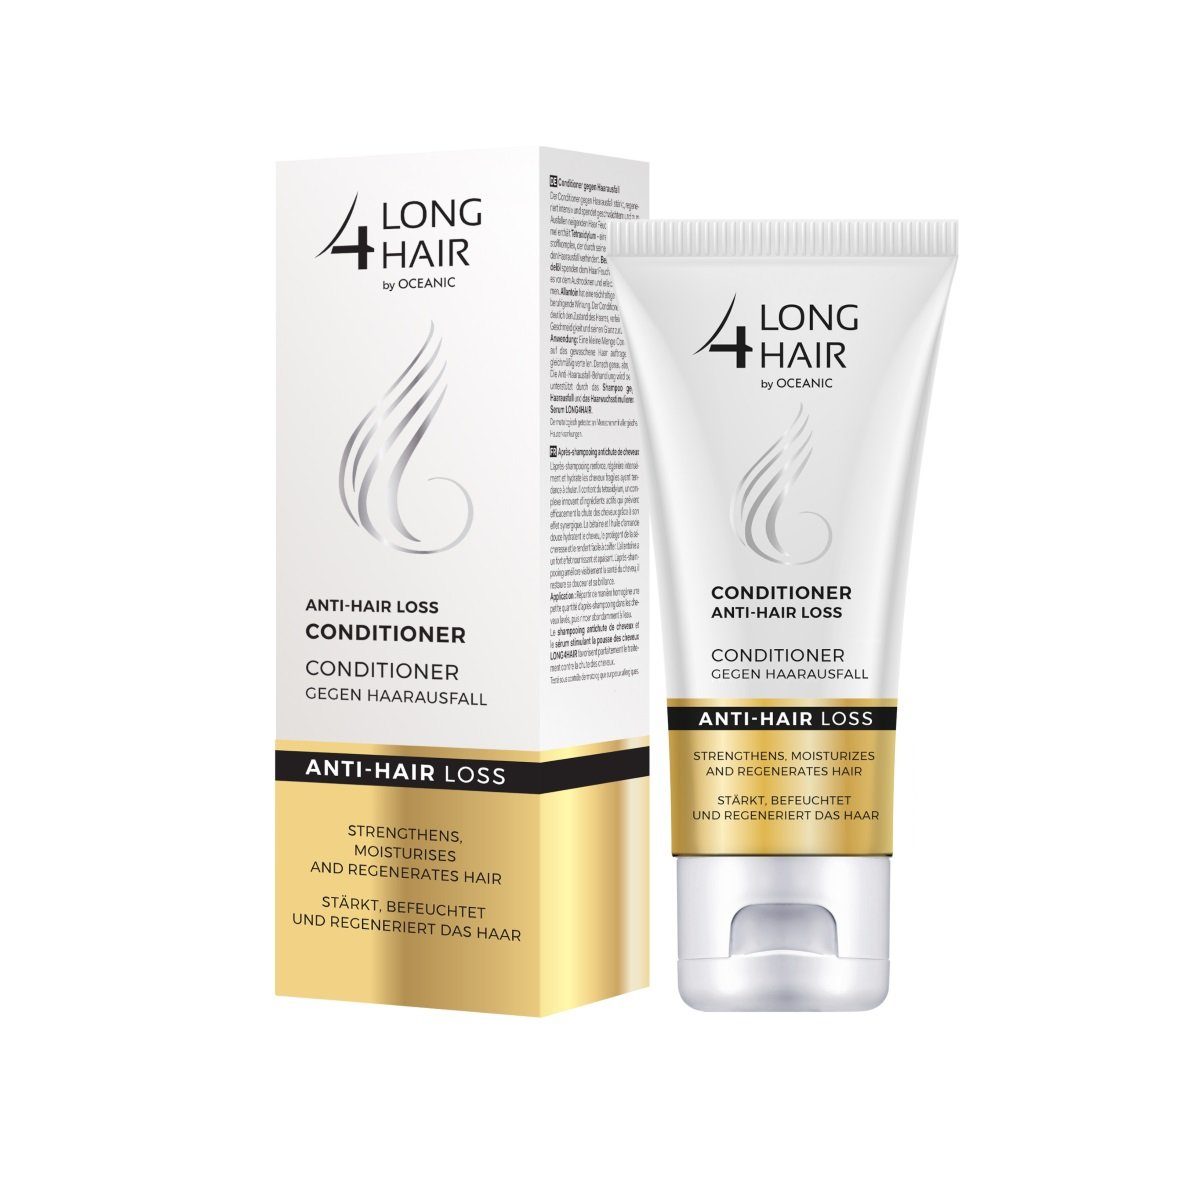 Oceanic Duschpflege Oceanic Long4Lashes Anti Hair Loss Strenghtening Conditioner 200 ml, Conditioner gegen Hausausfall